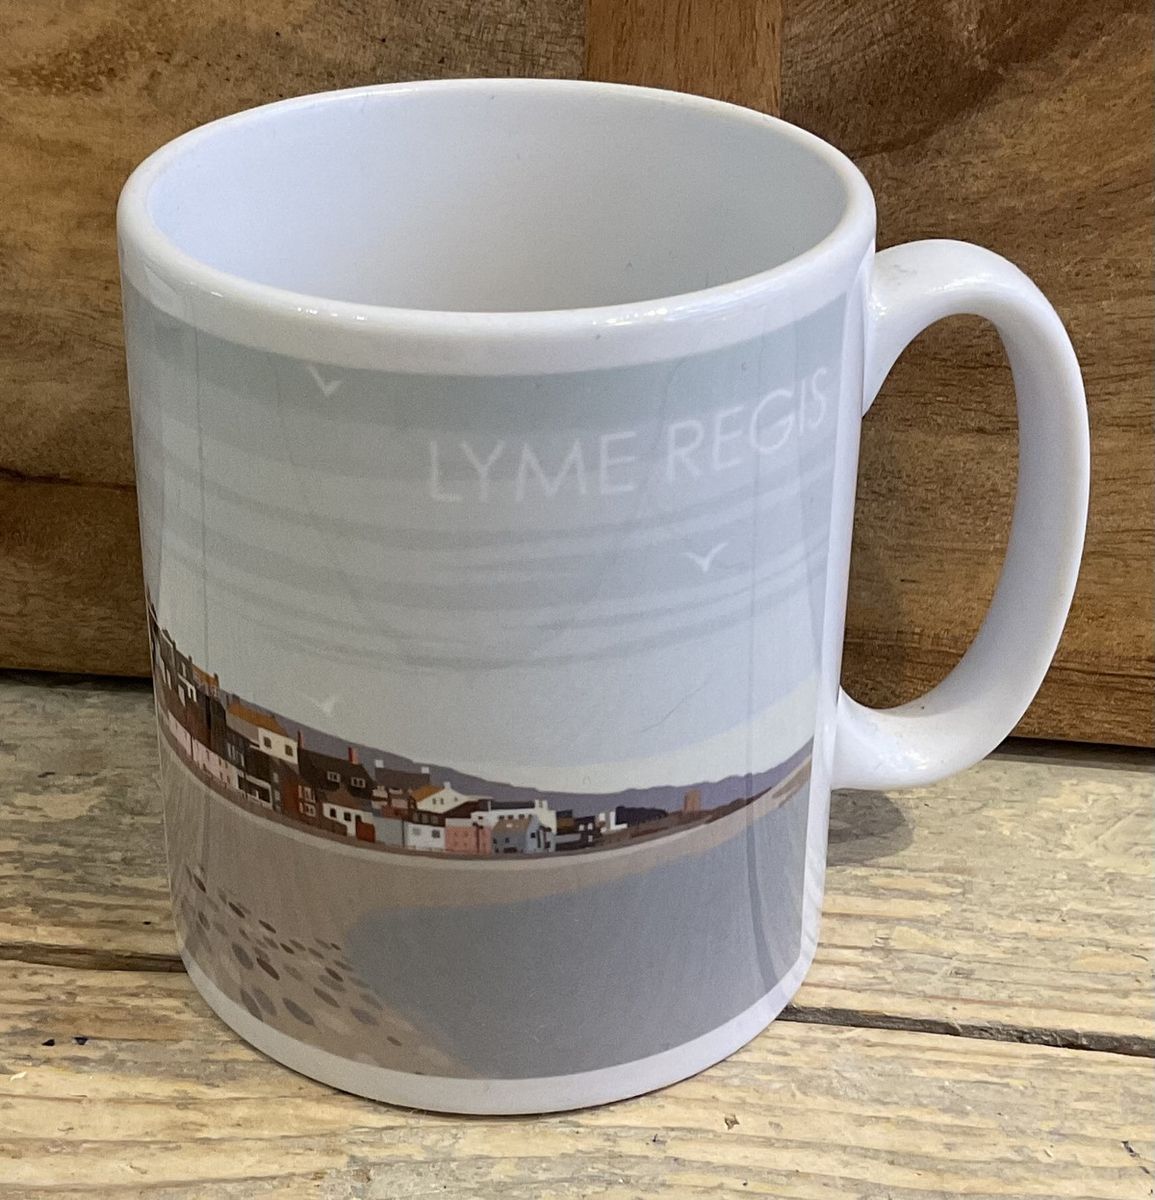 Lyme Regis mug ‘morning sky’ 2